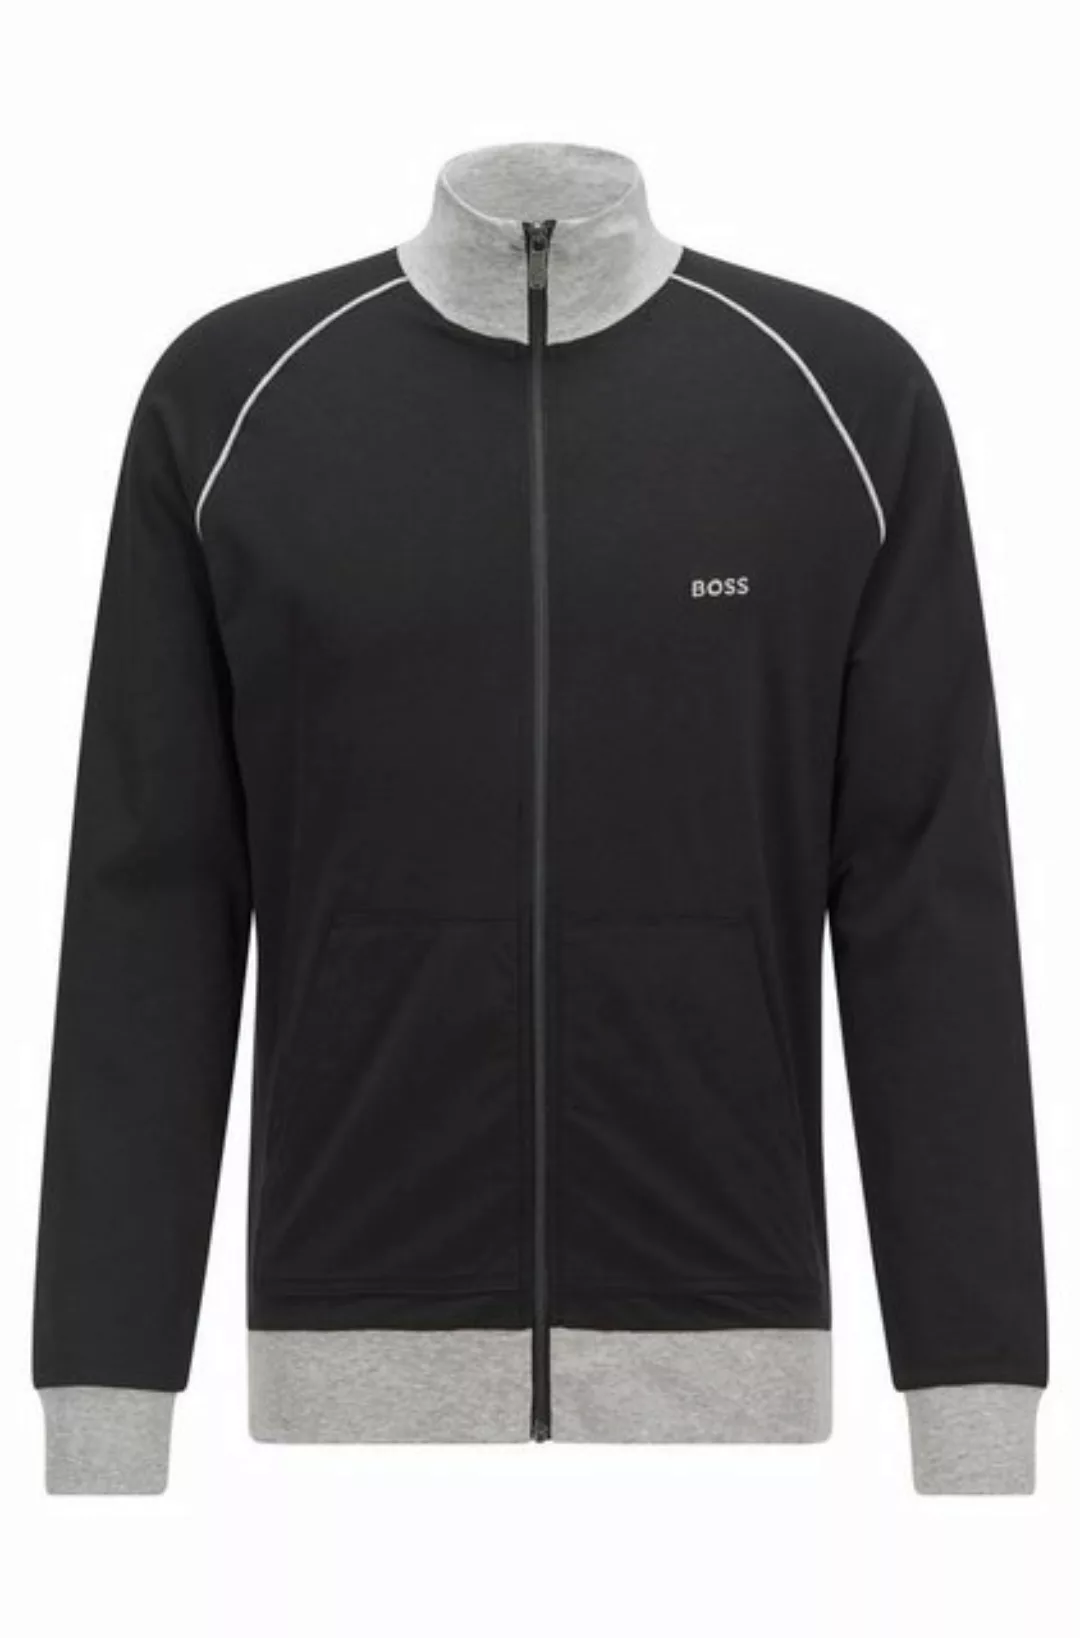 BOSS Sweatshirt Herren Sweatjacke - Mix & Match Jacket, Zipper günstig online kaufen